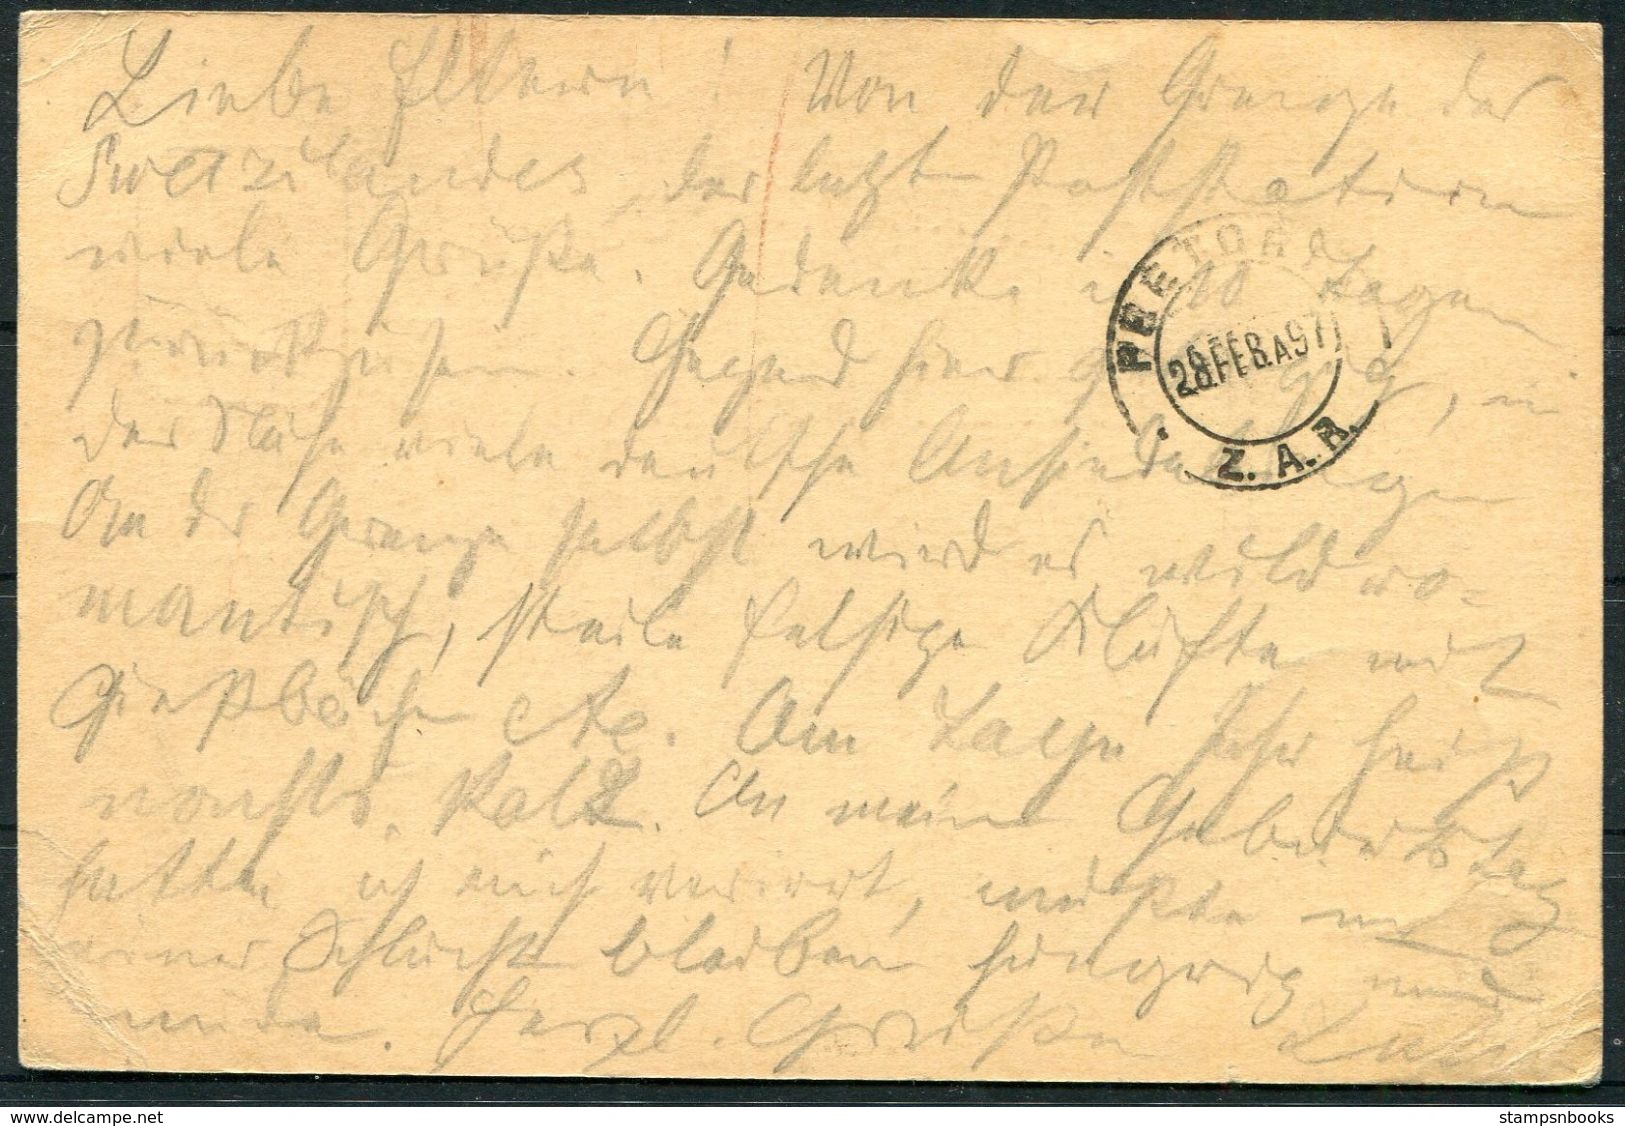 1897 South Africa Z.A.R. Stationery Postcard - Frottstadt Germany - Nuova Repubblica (1886-1887)